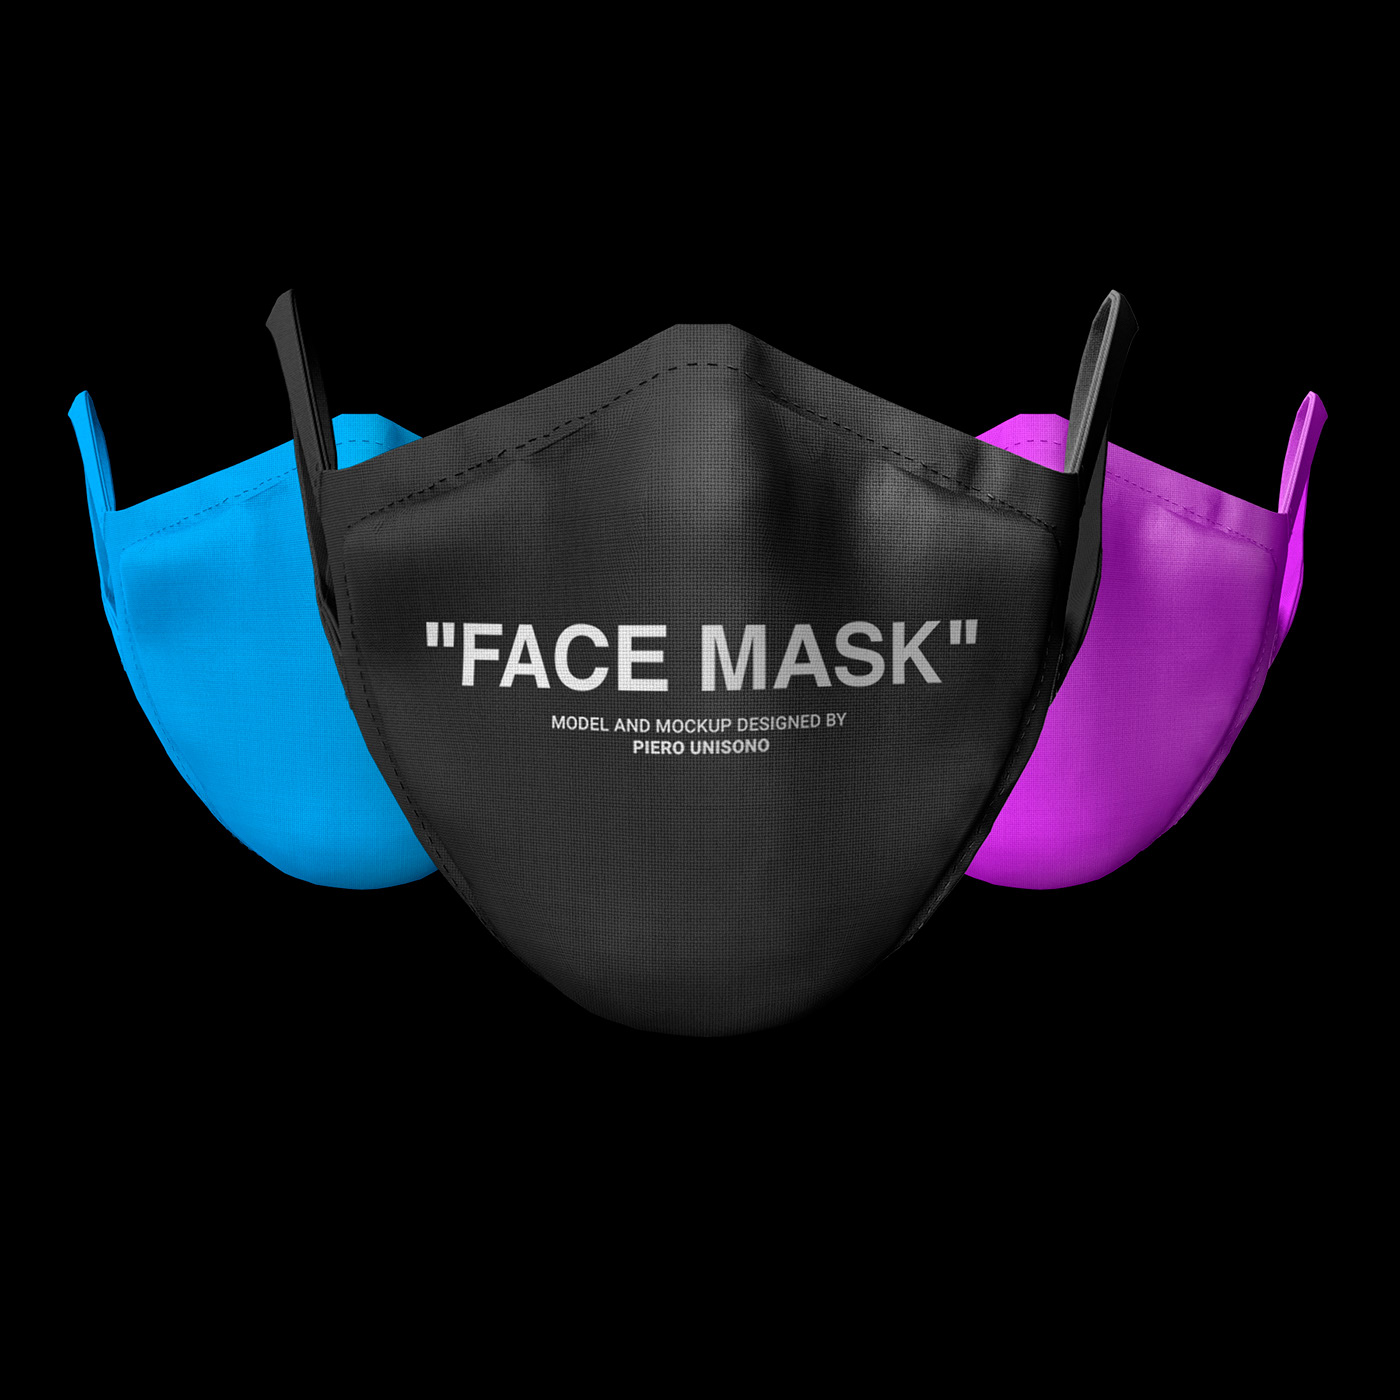 Download Face Mask Mockup - Free download (PSD) on Behance